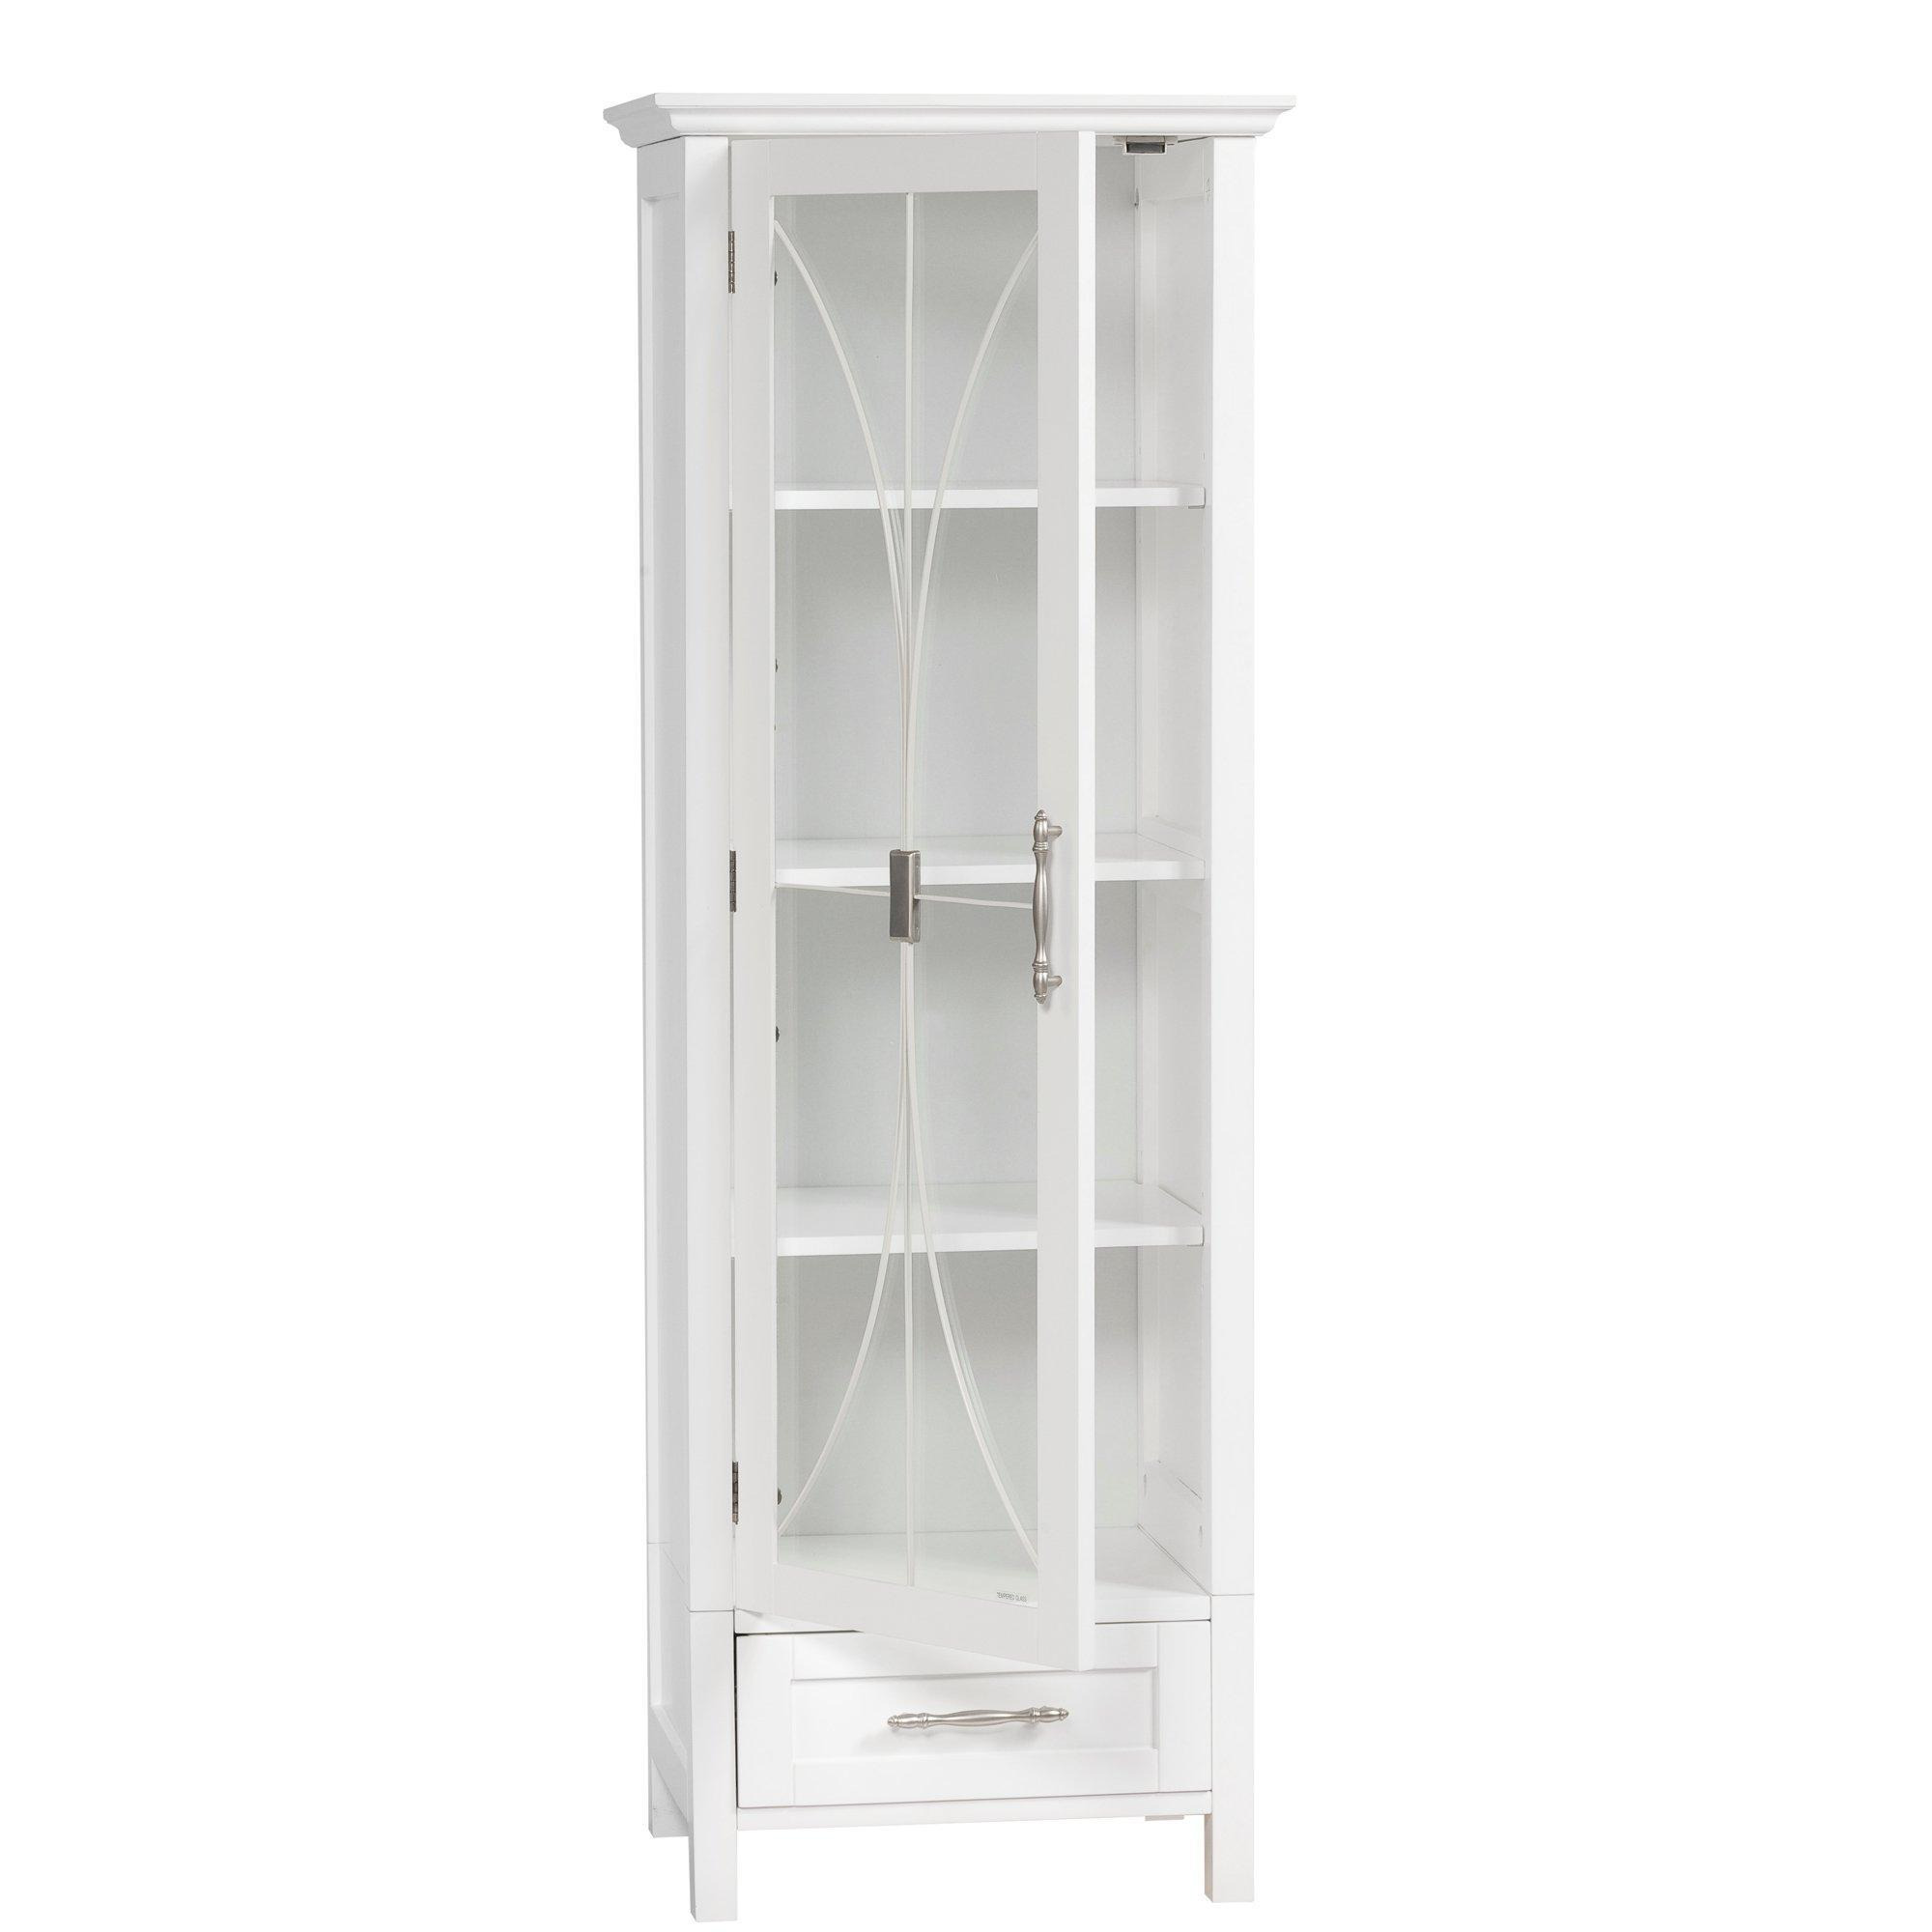 Teamson Home Delaney Freestanding Linen Cabinet, White - image 1